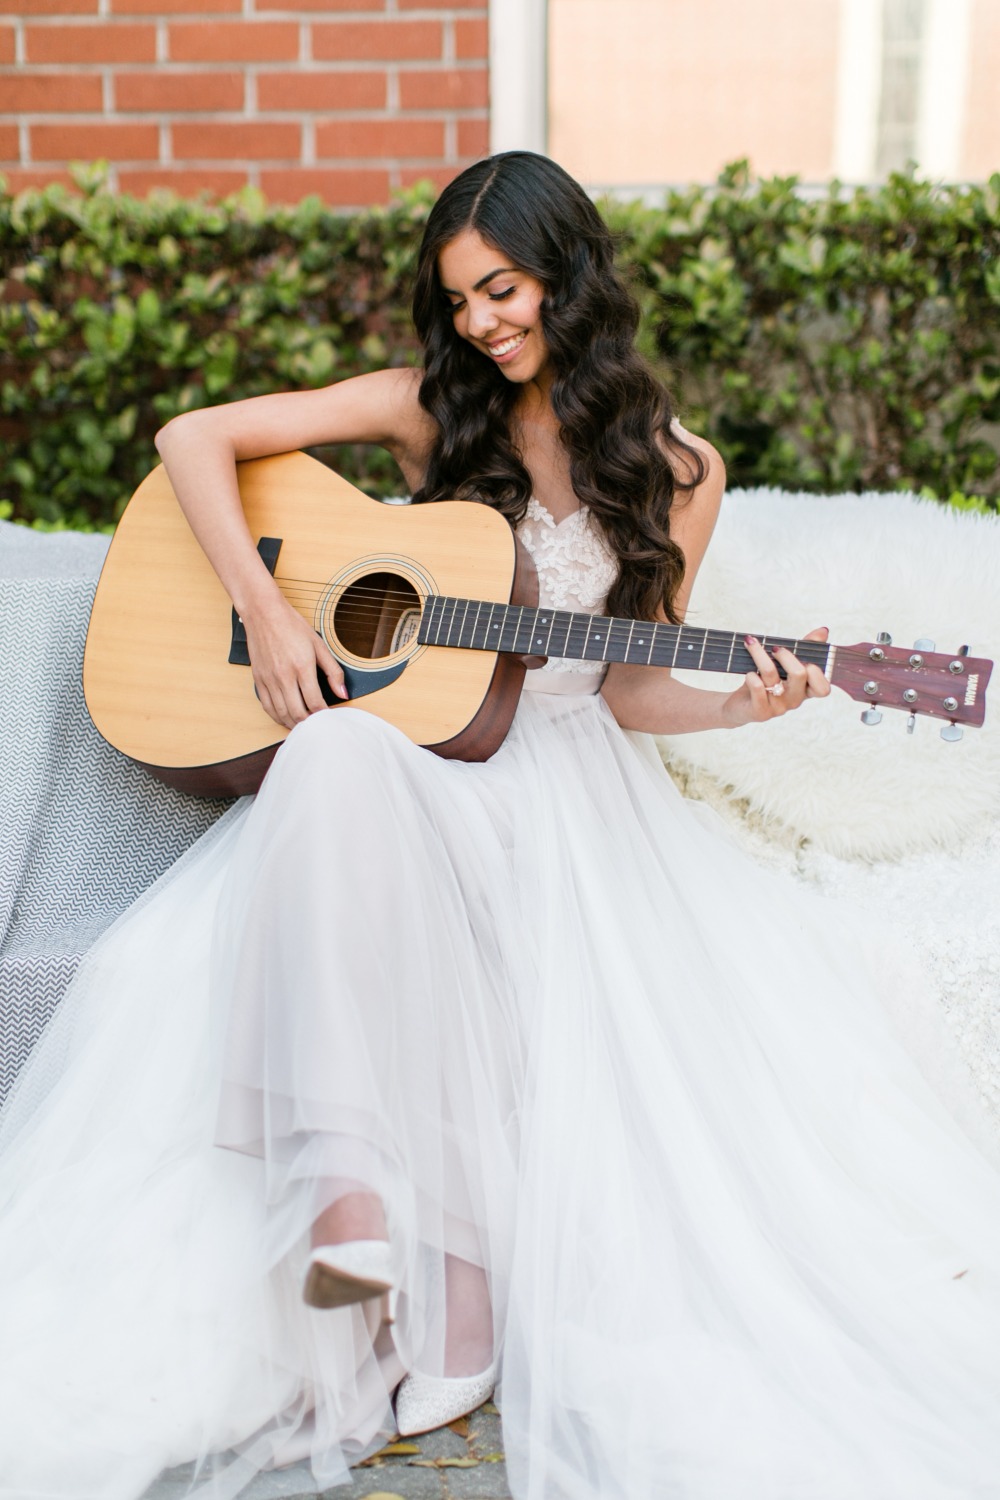 Bridal portrait playing guitar idea